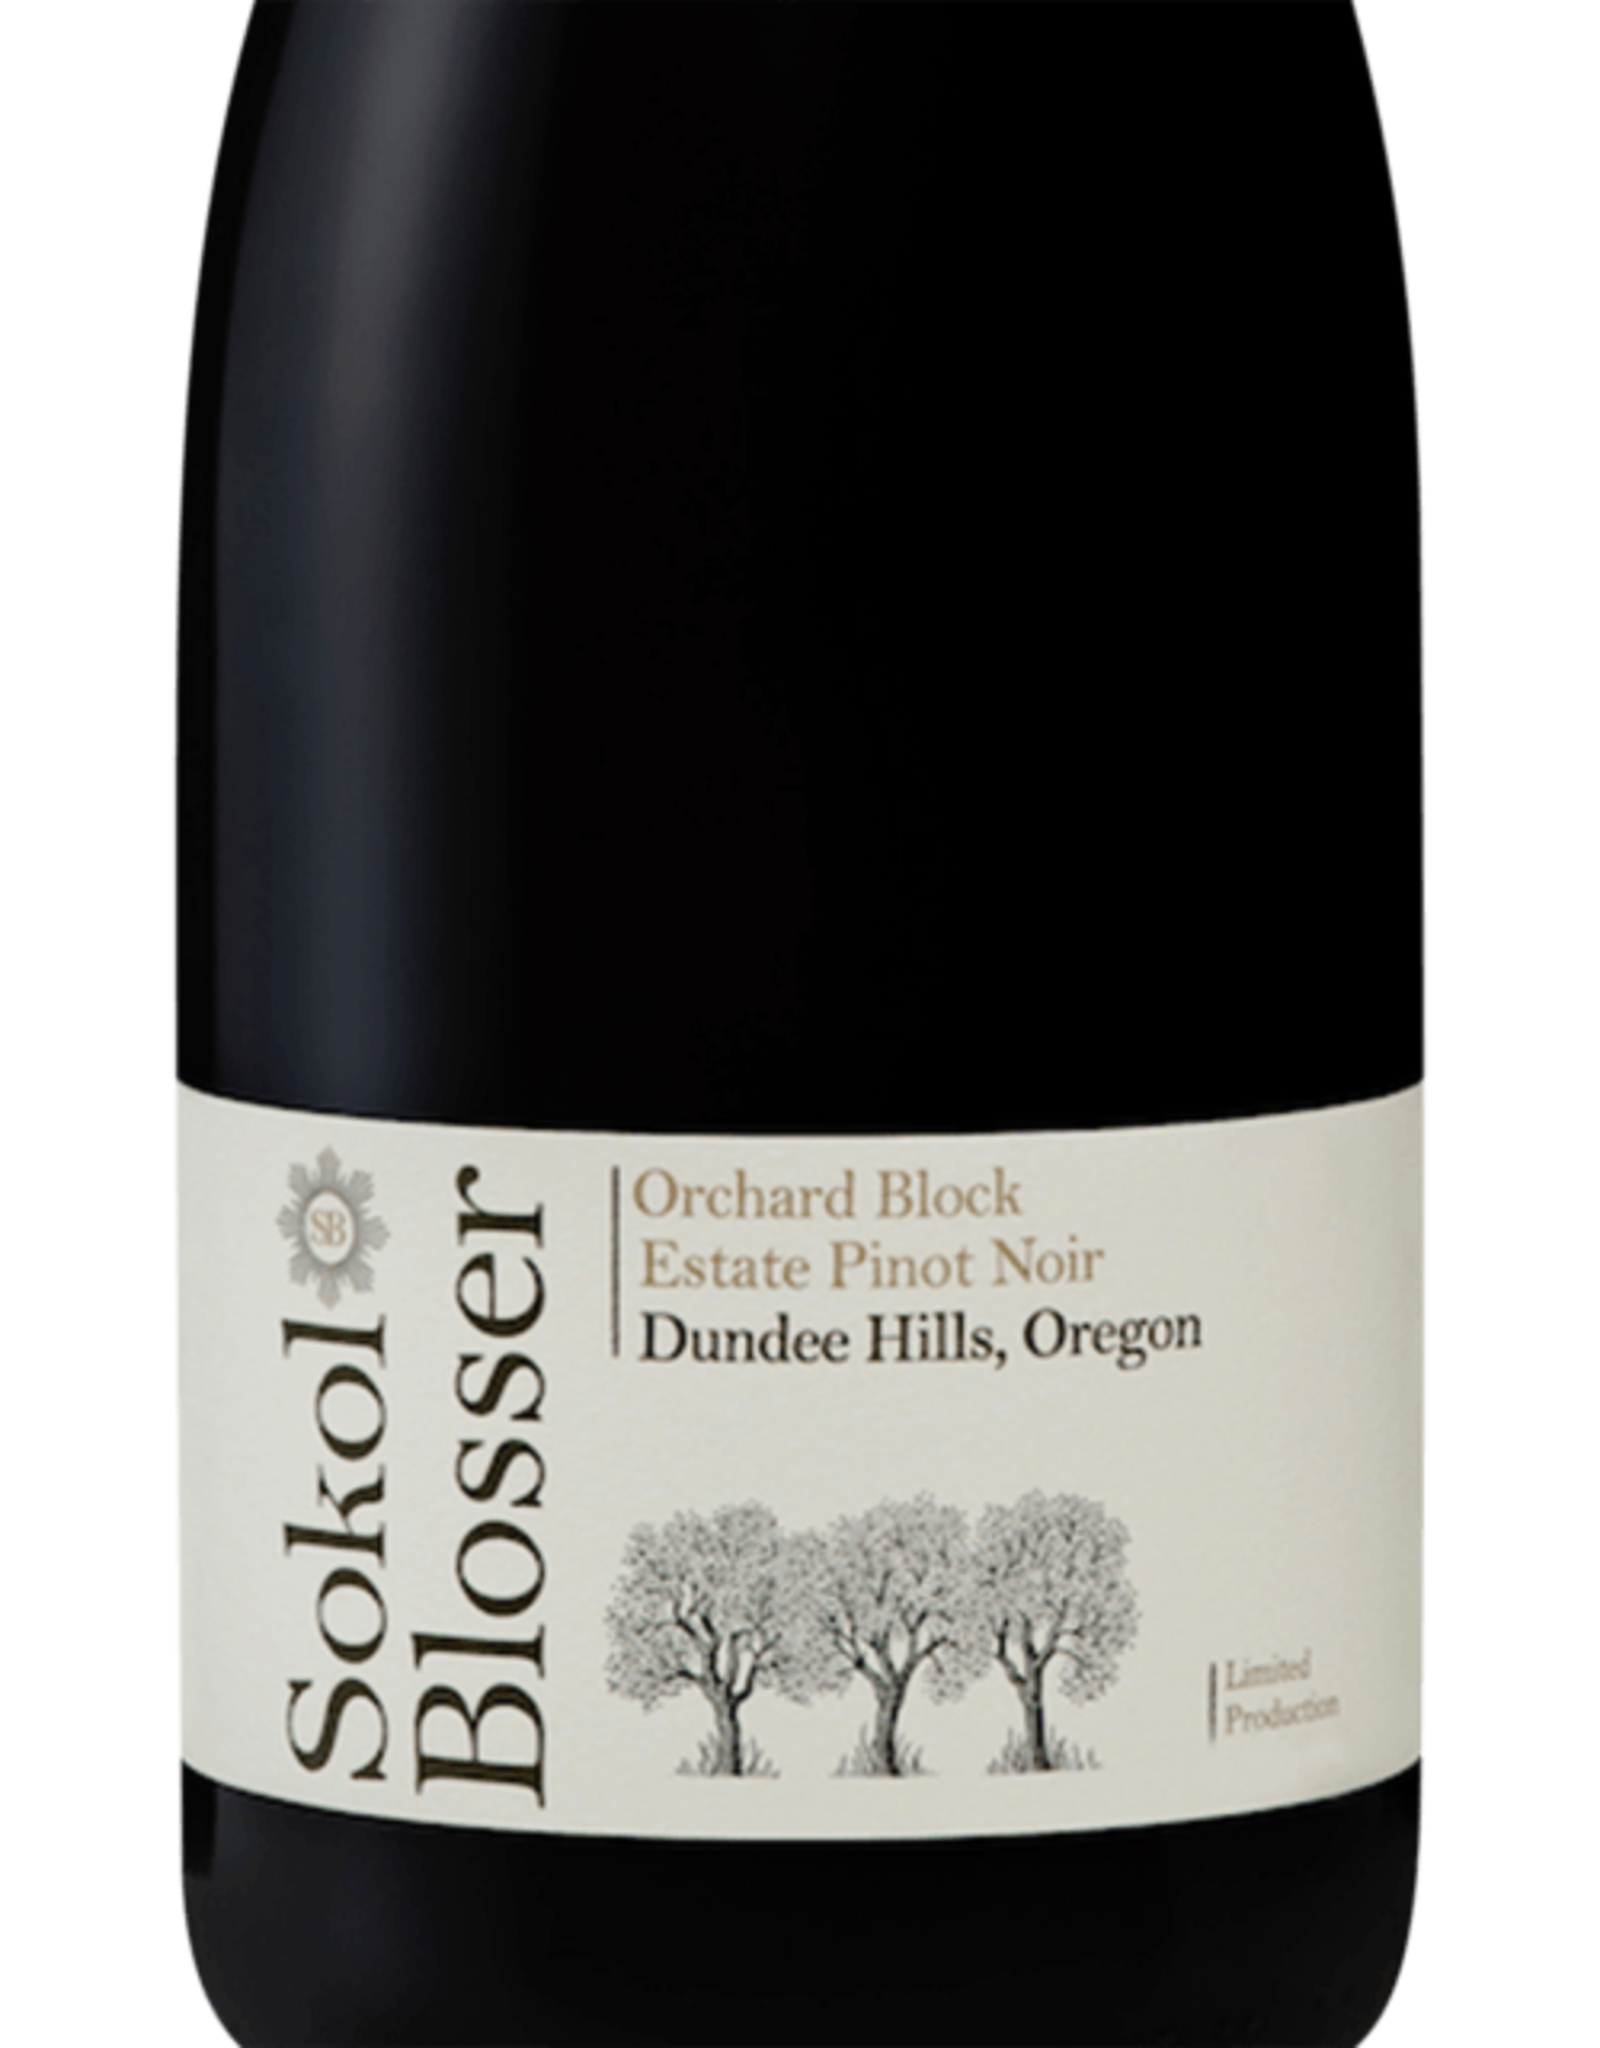 Sokol Blosser Orchard Block Pinot Noir Oregon 2017/2018